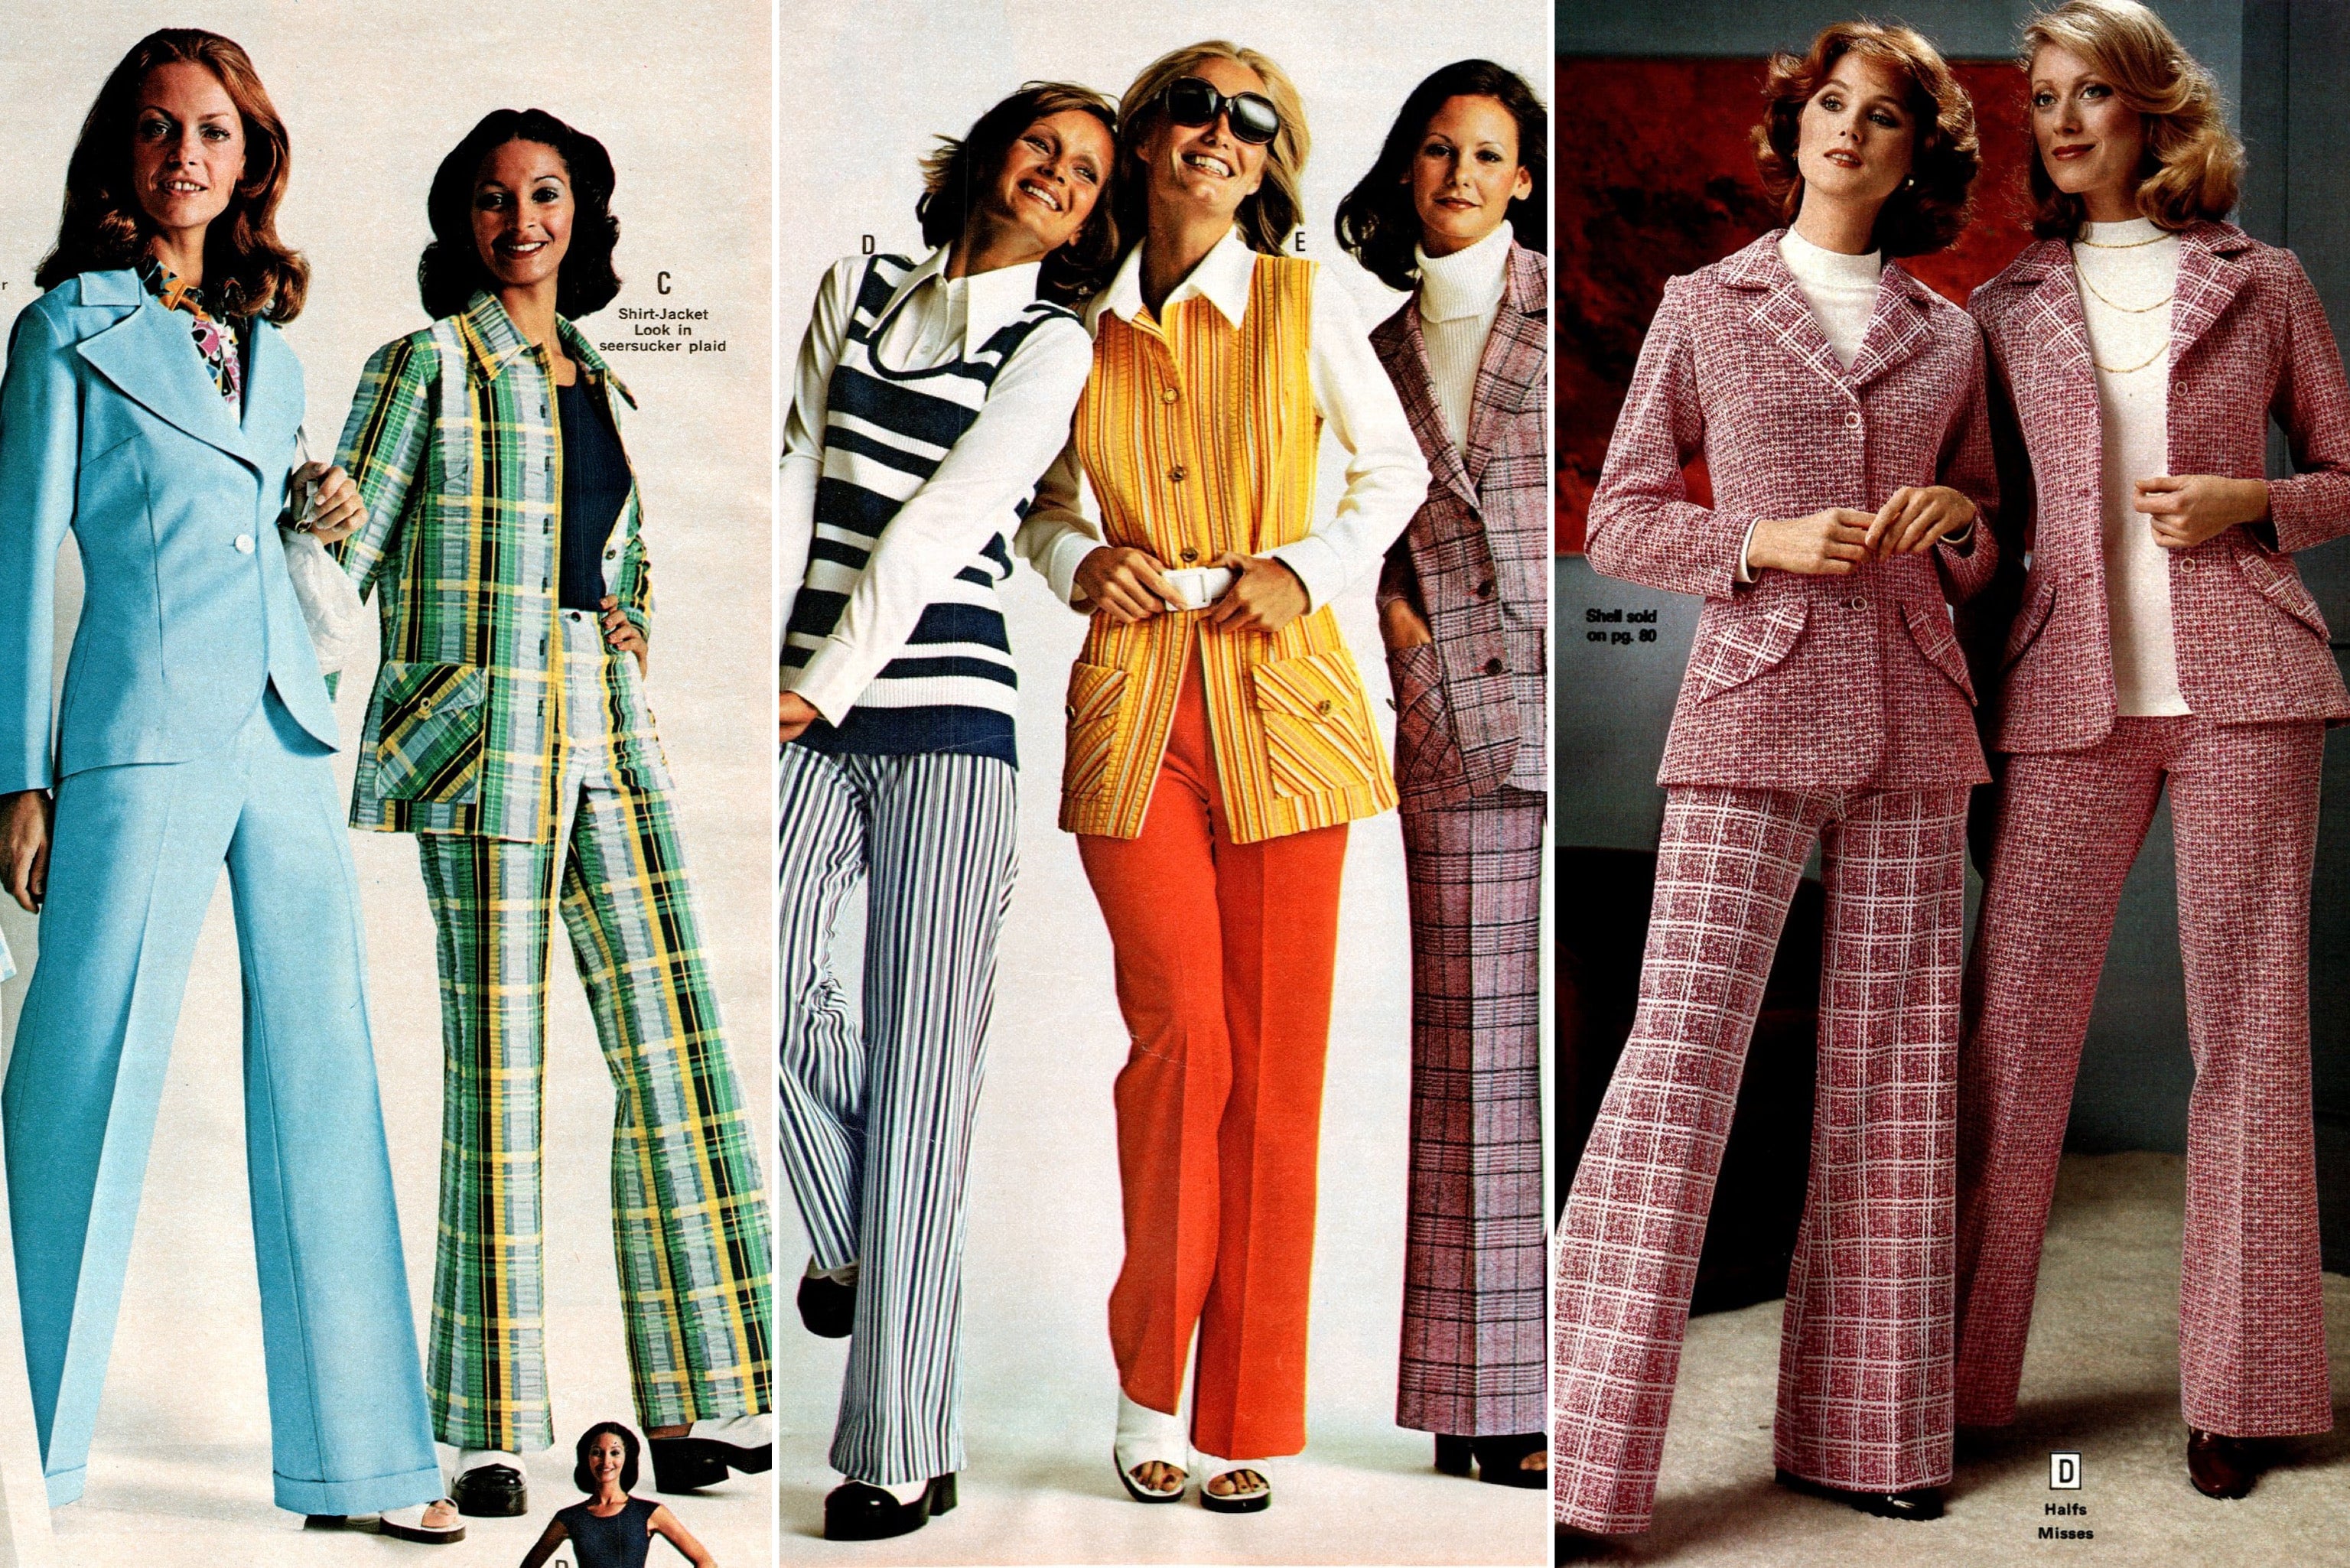 Women Pajama Pants Sleepwear Womens Pajama Bottoms, Retro Plaid Orange  Black Yellow : : Clothing, Shoes & Accessories